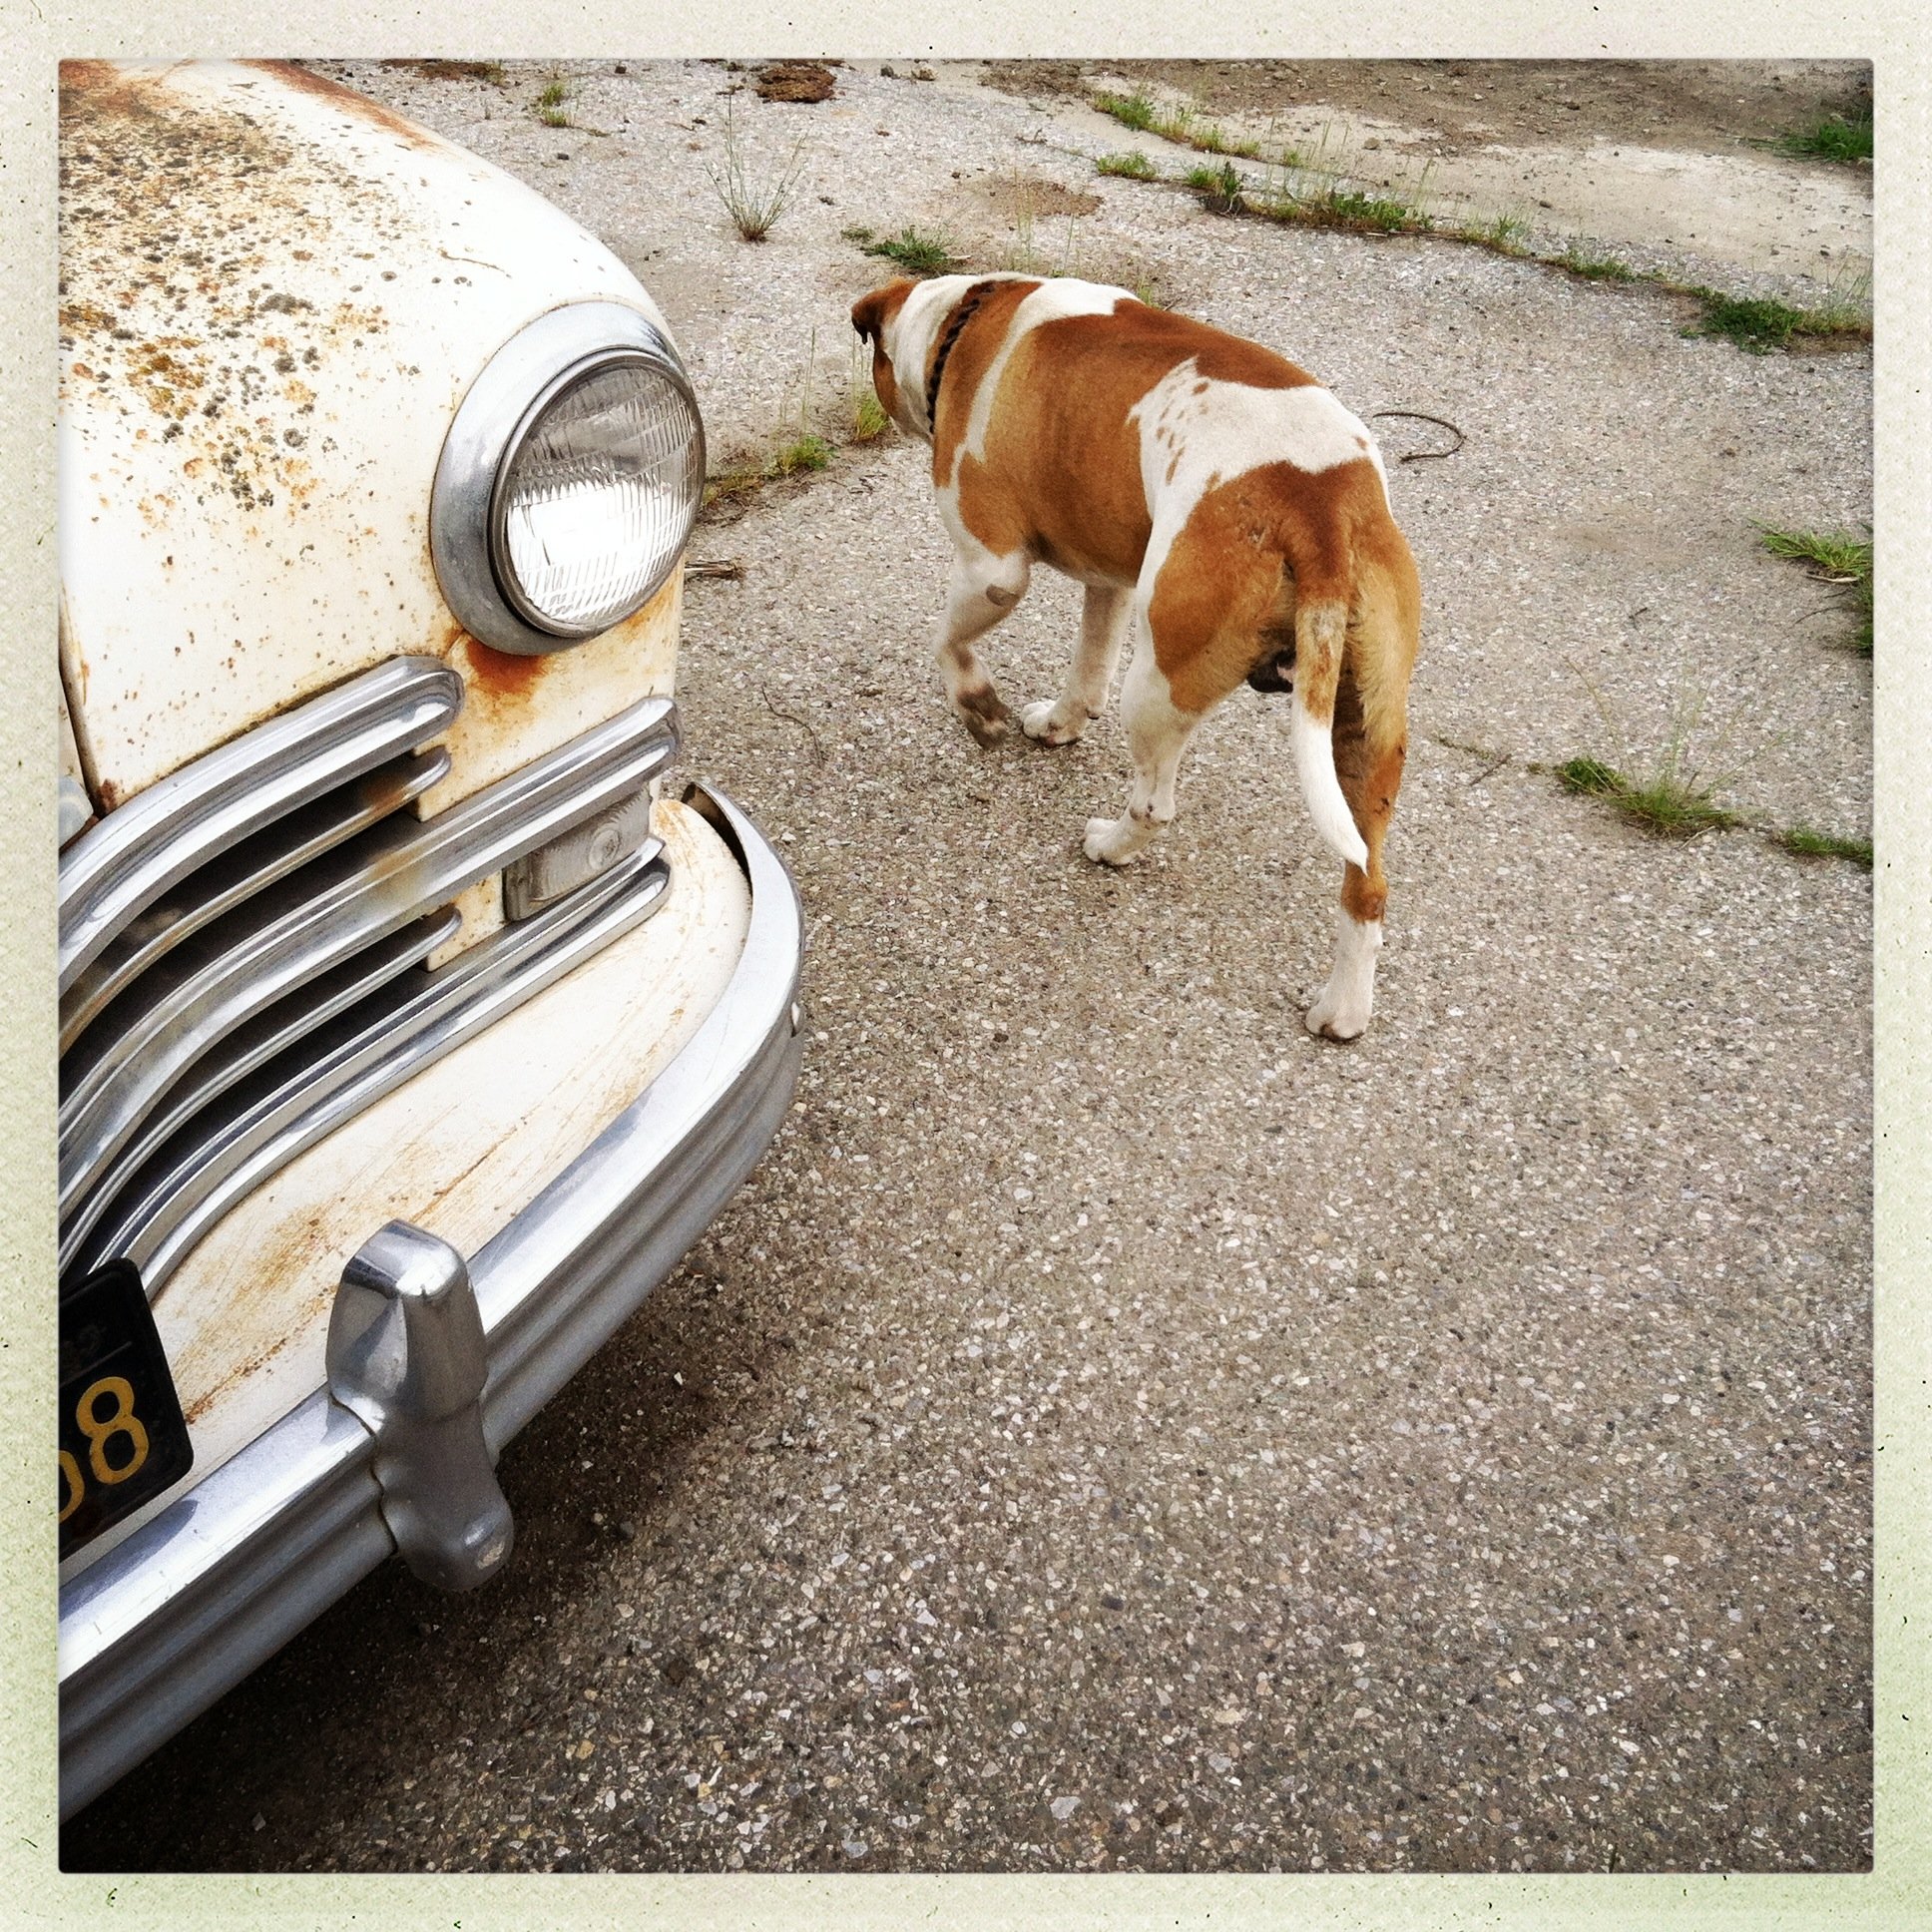  Junkyard Dog. Morgan Hill, CA 2013 